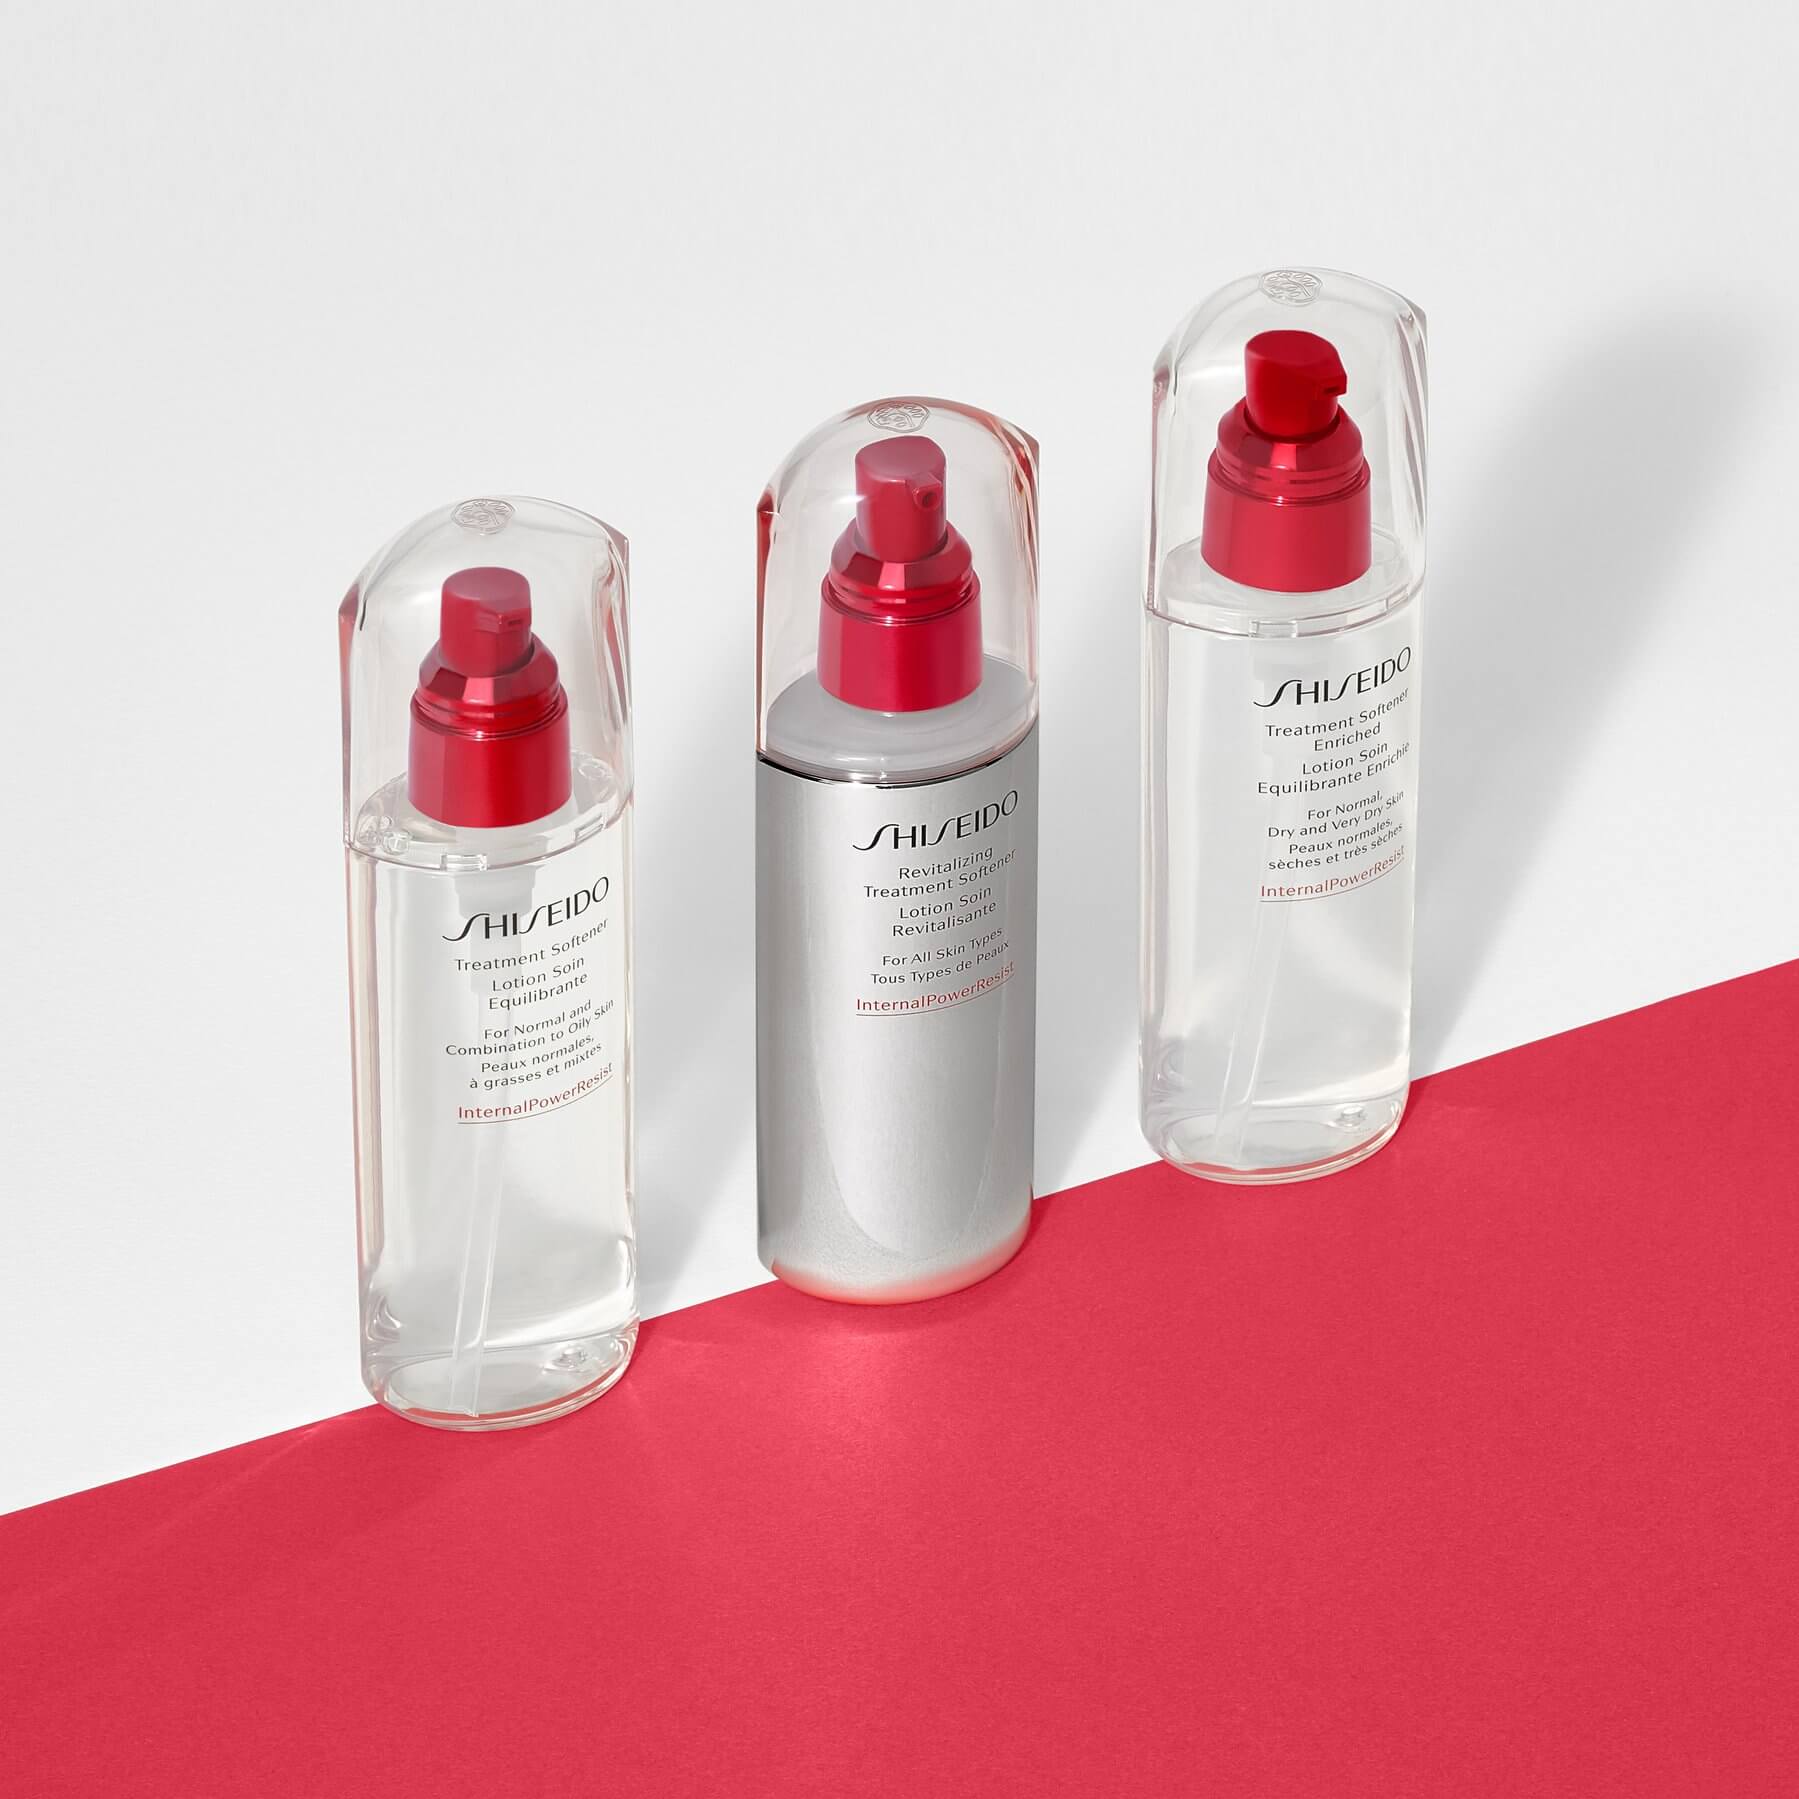 Shiseido Revitalizing Treatment Softener Lotion Soin Revitalisant 75 ml โลชั่นบำรุงผิวหน้า ต่อต้านสัญญาณความร่วงโรยผิว ปรับสมดุลผิว พร้อมกระตุ้นการผลิตความชุ่มชื้น